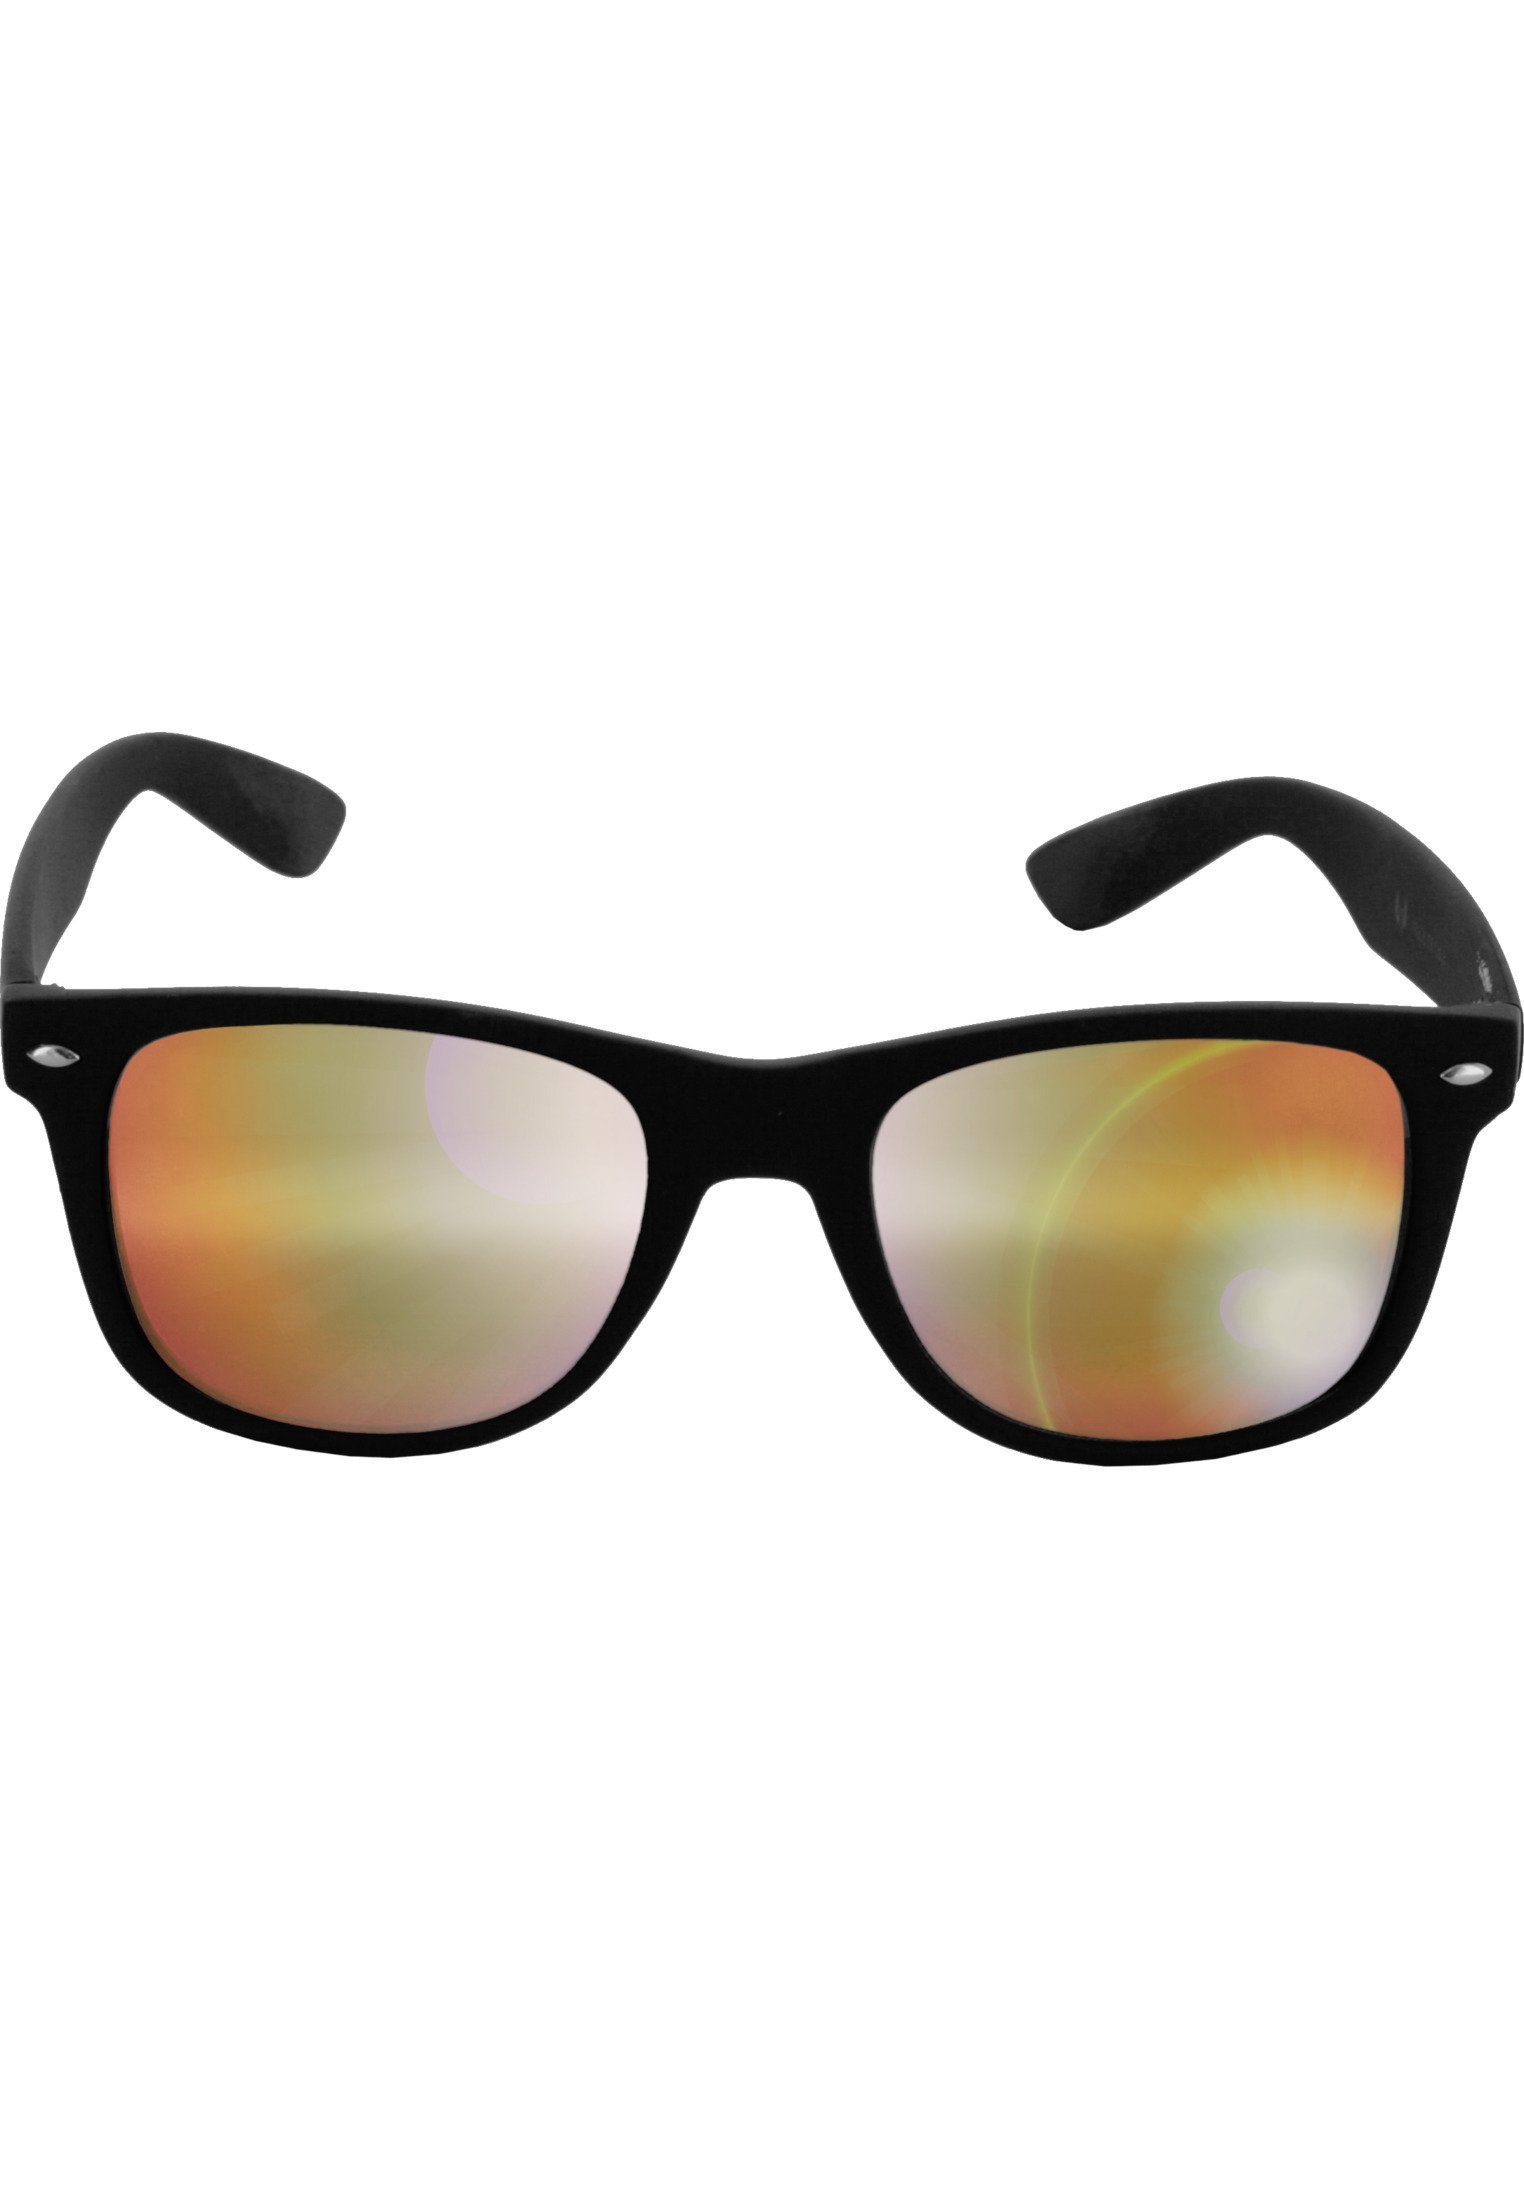 MSTRDS Sonnenbrille Accessoires Sunglasses Likoma Mirror blk/orange